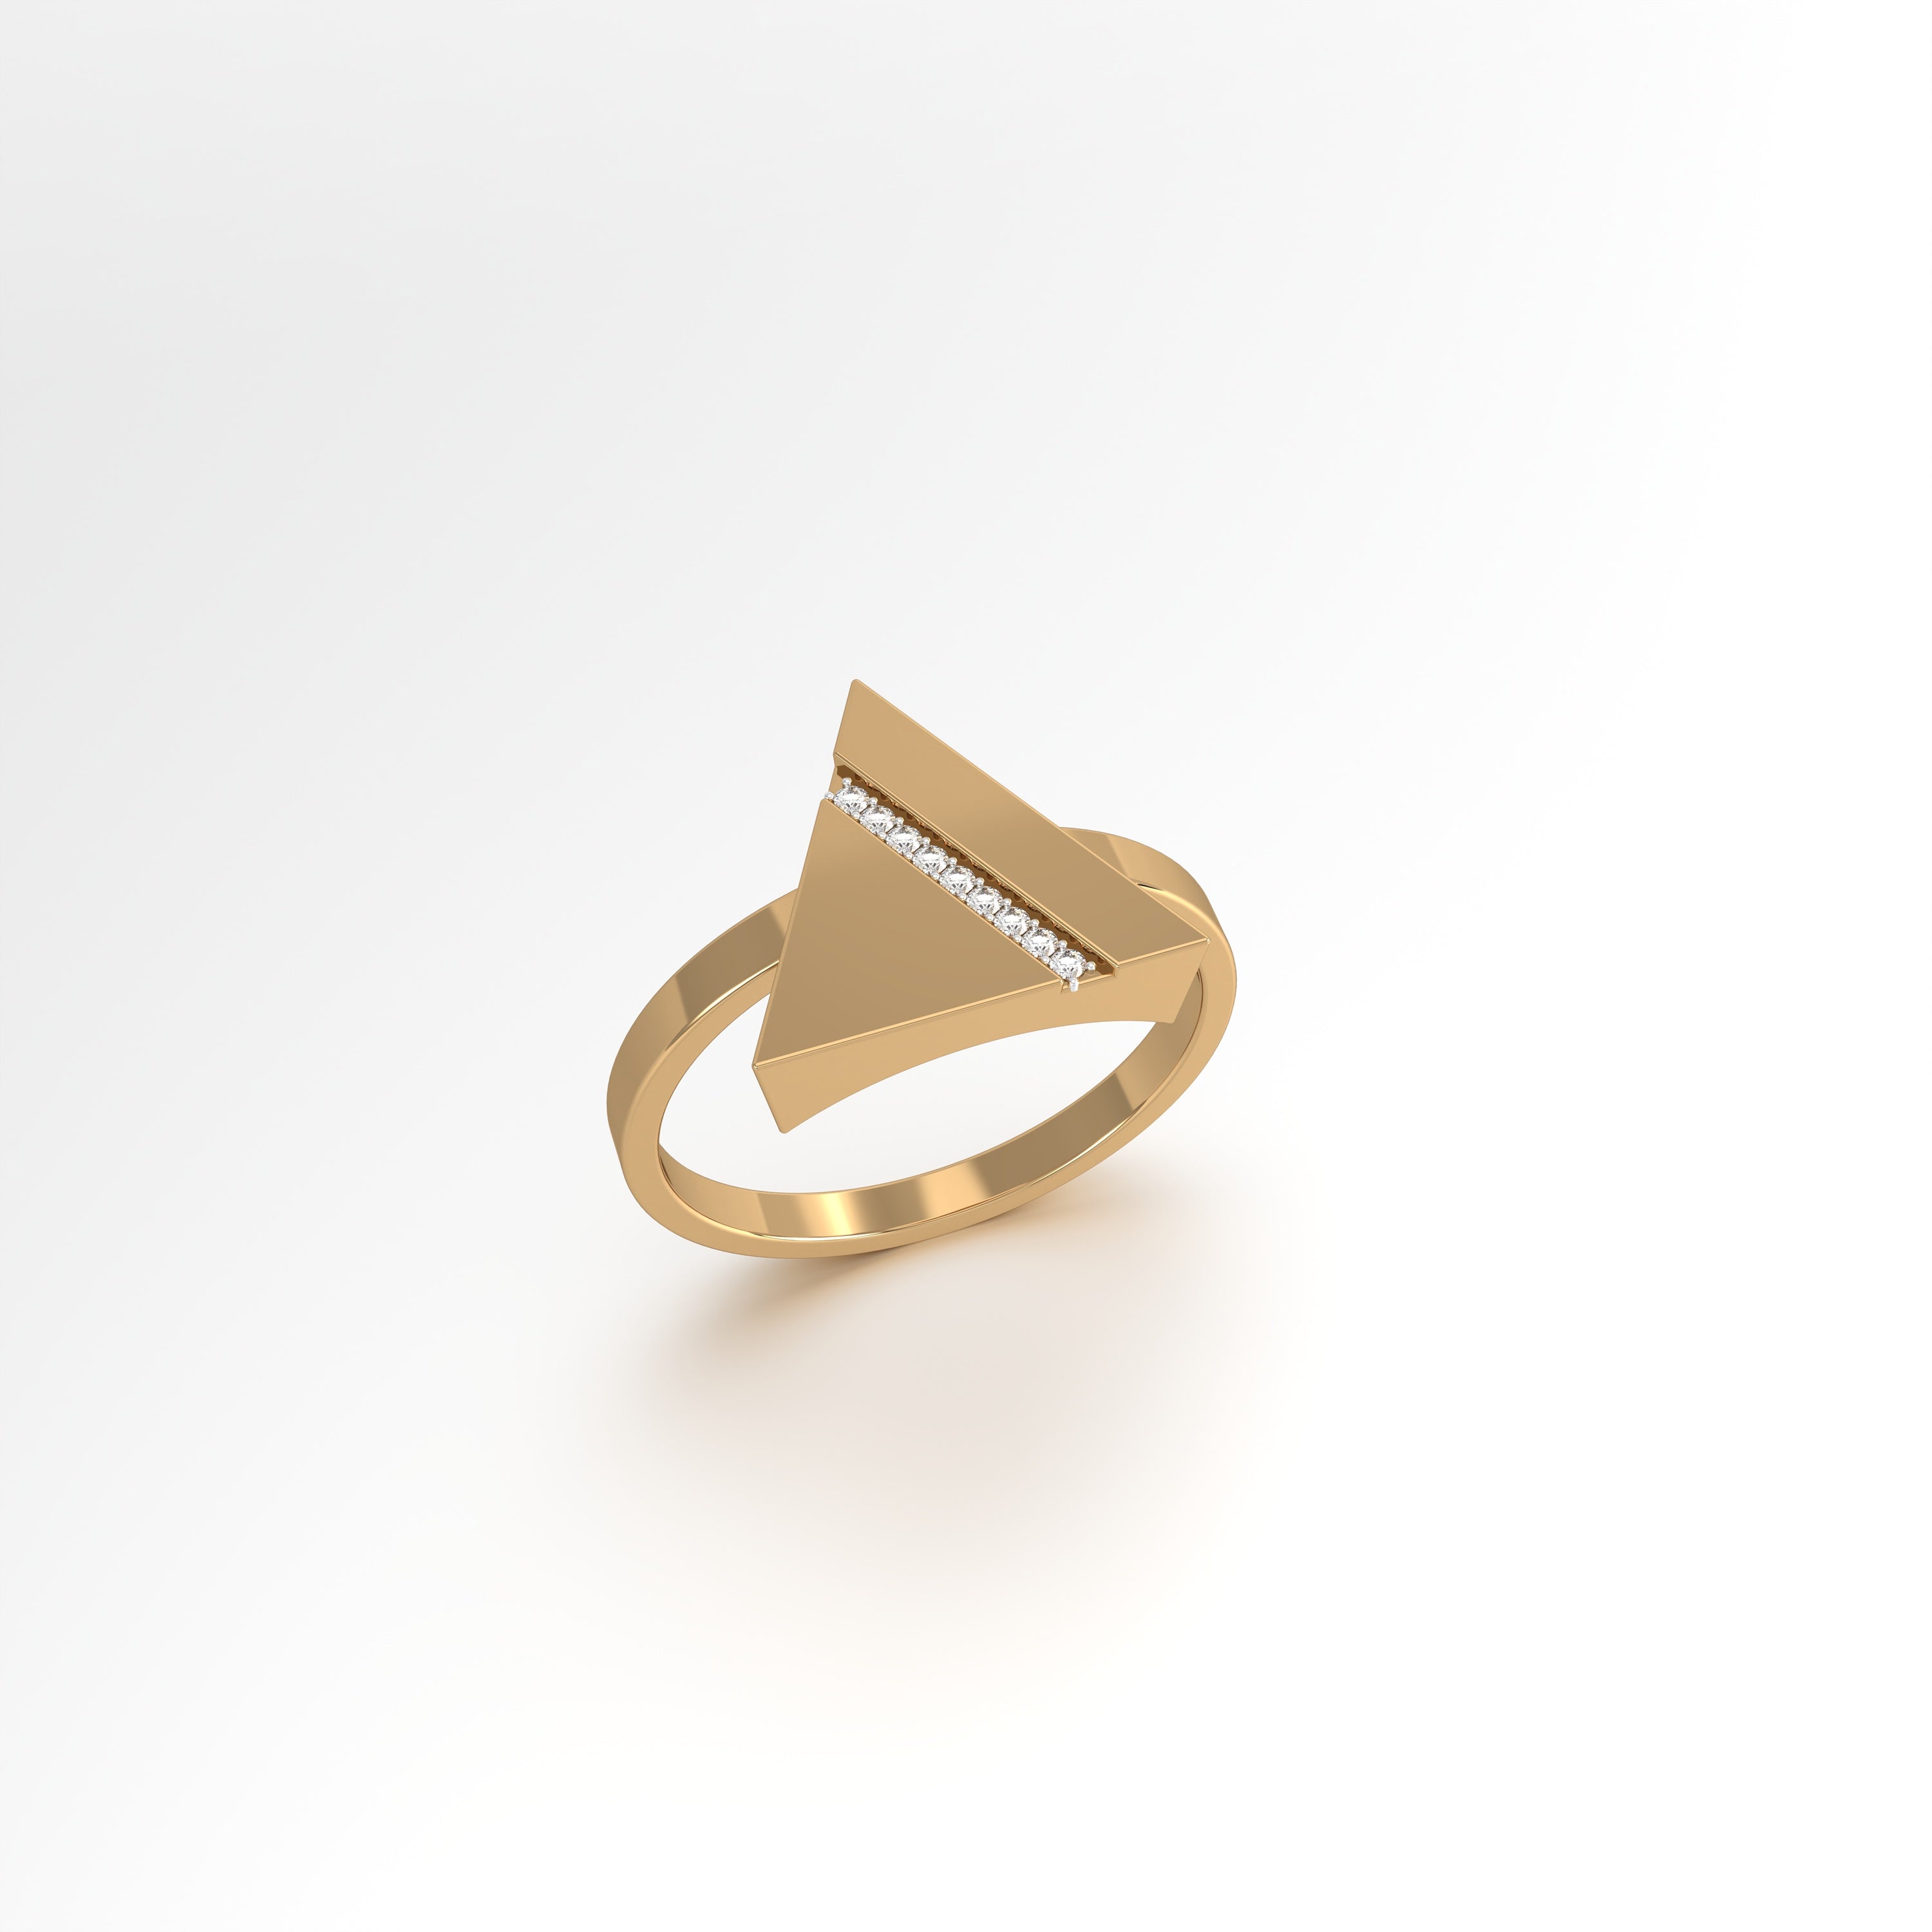 Aurm Triangle - 'Set the bar' - Ring Medium